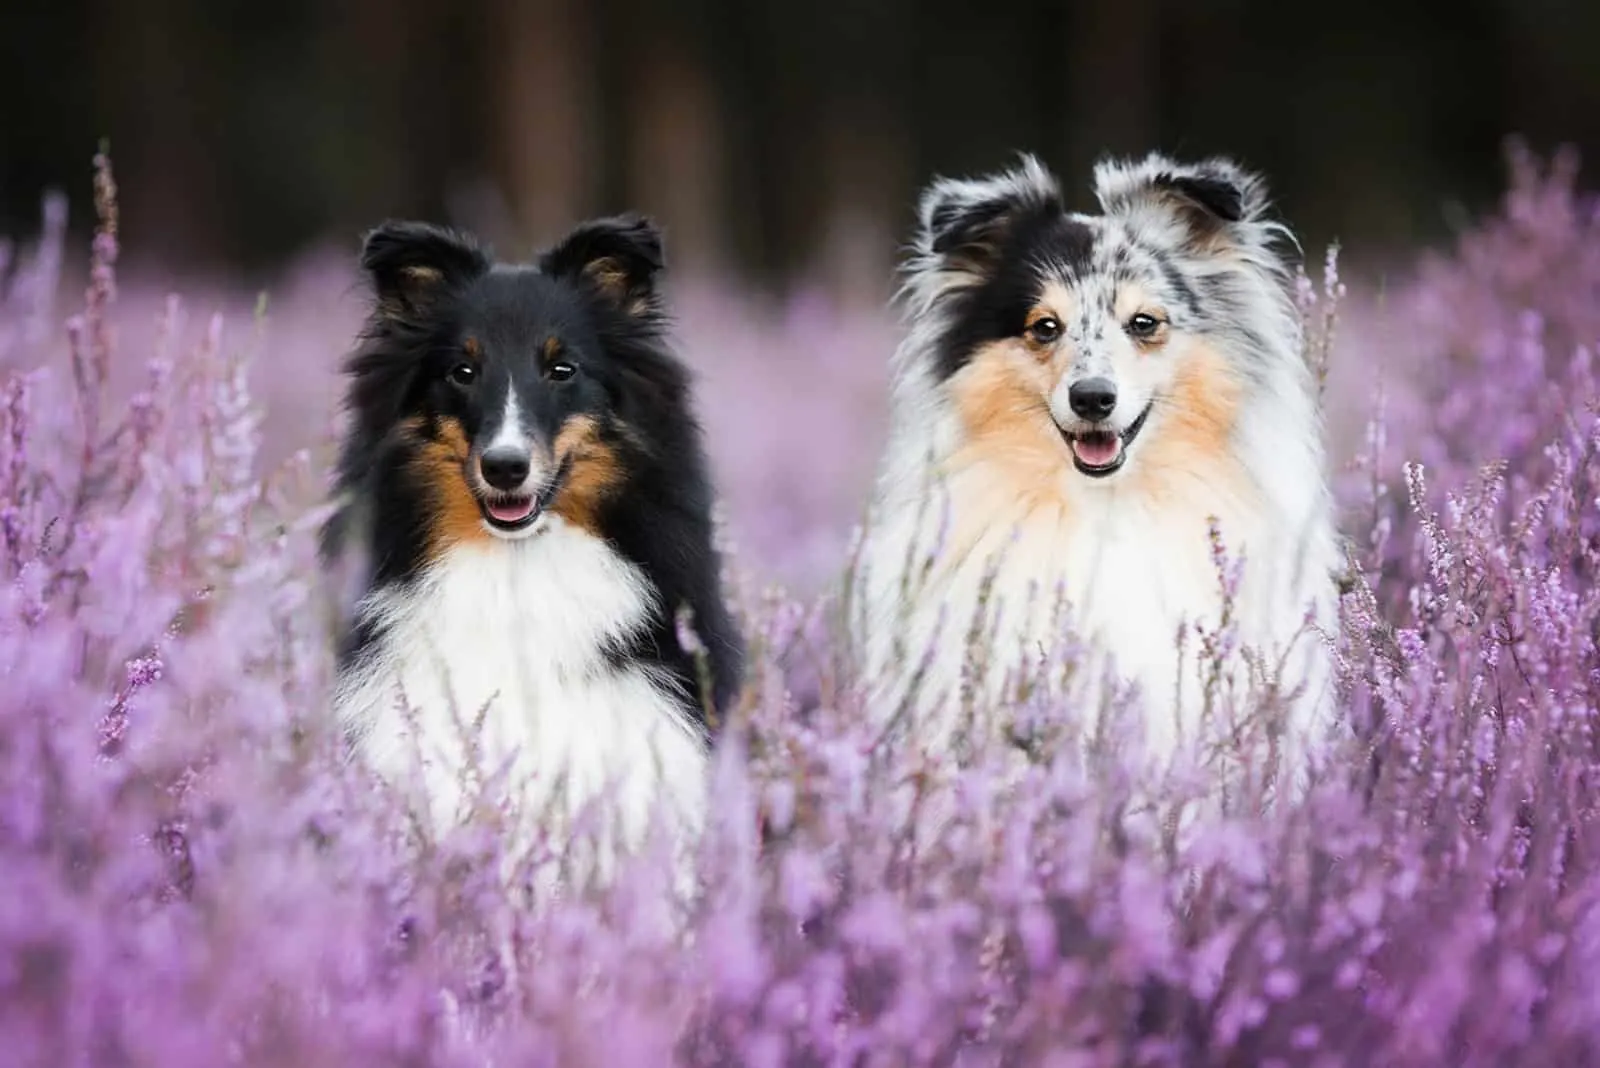 Two cute dogs in flowers